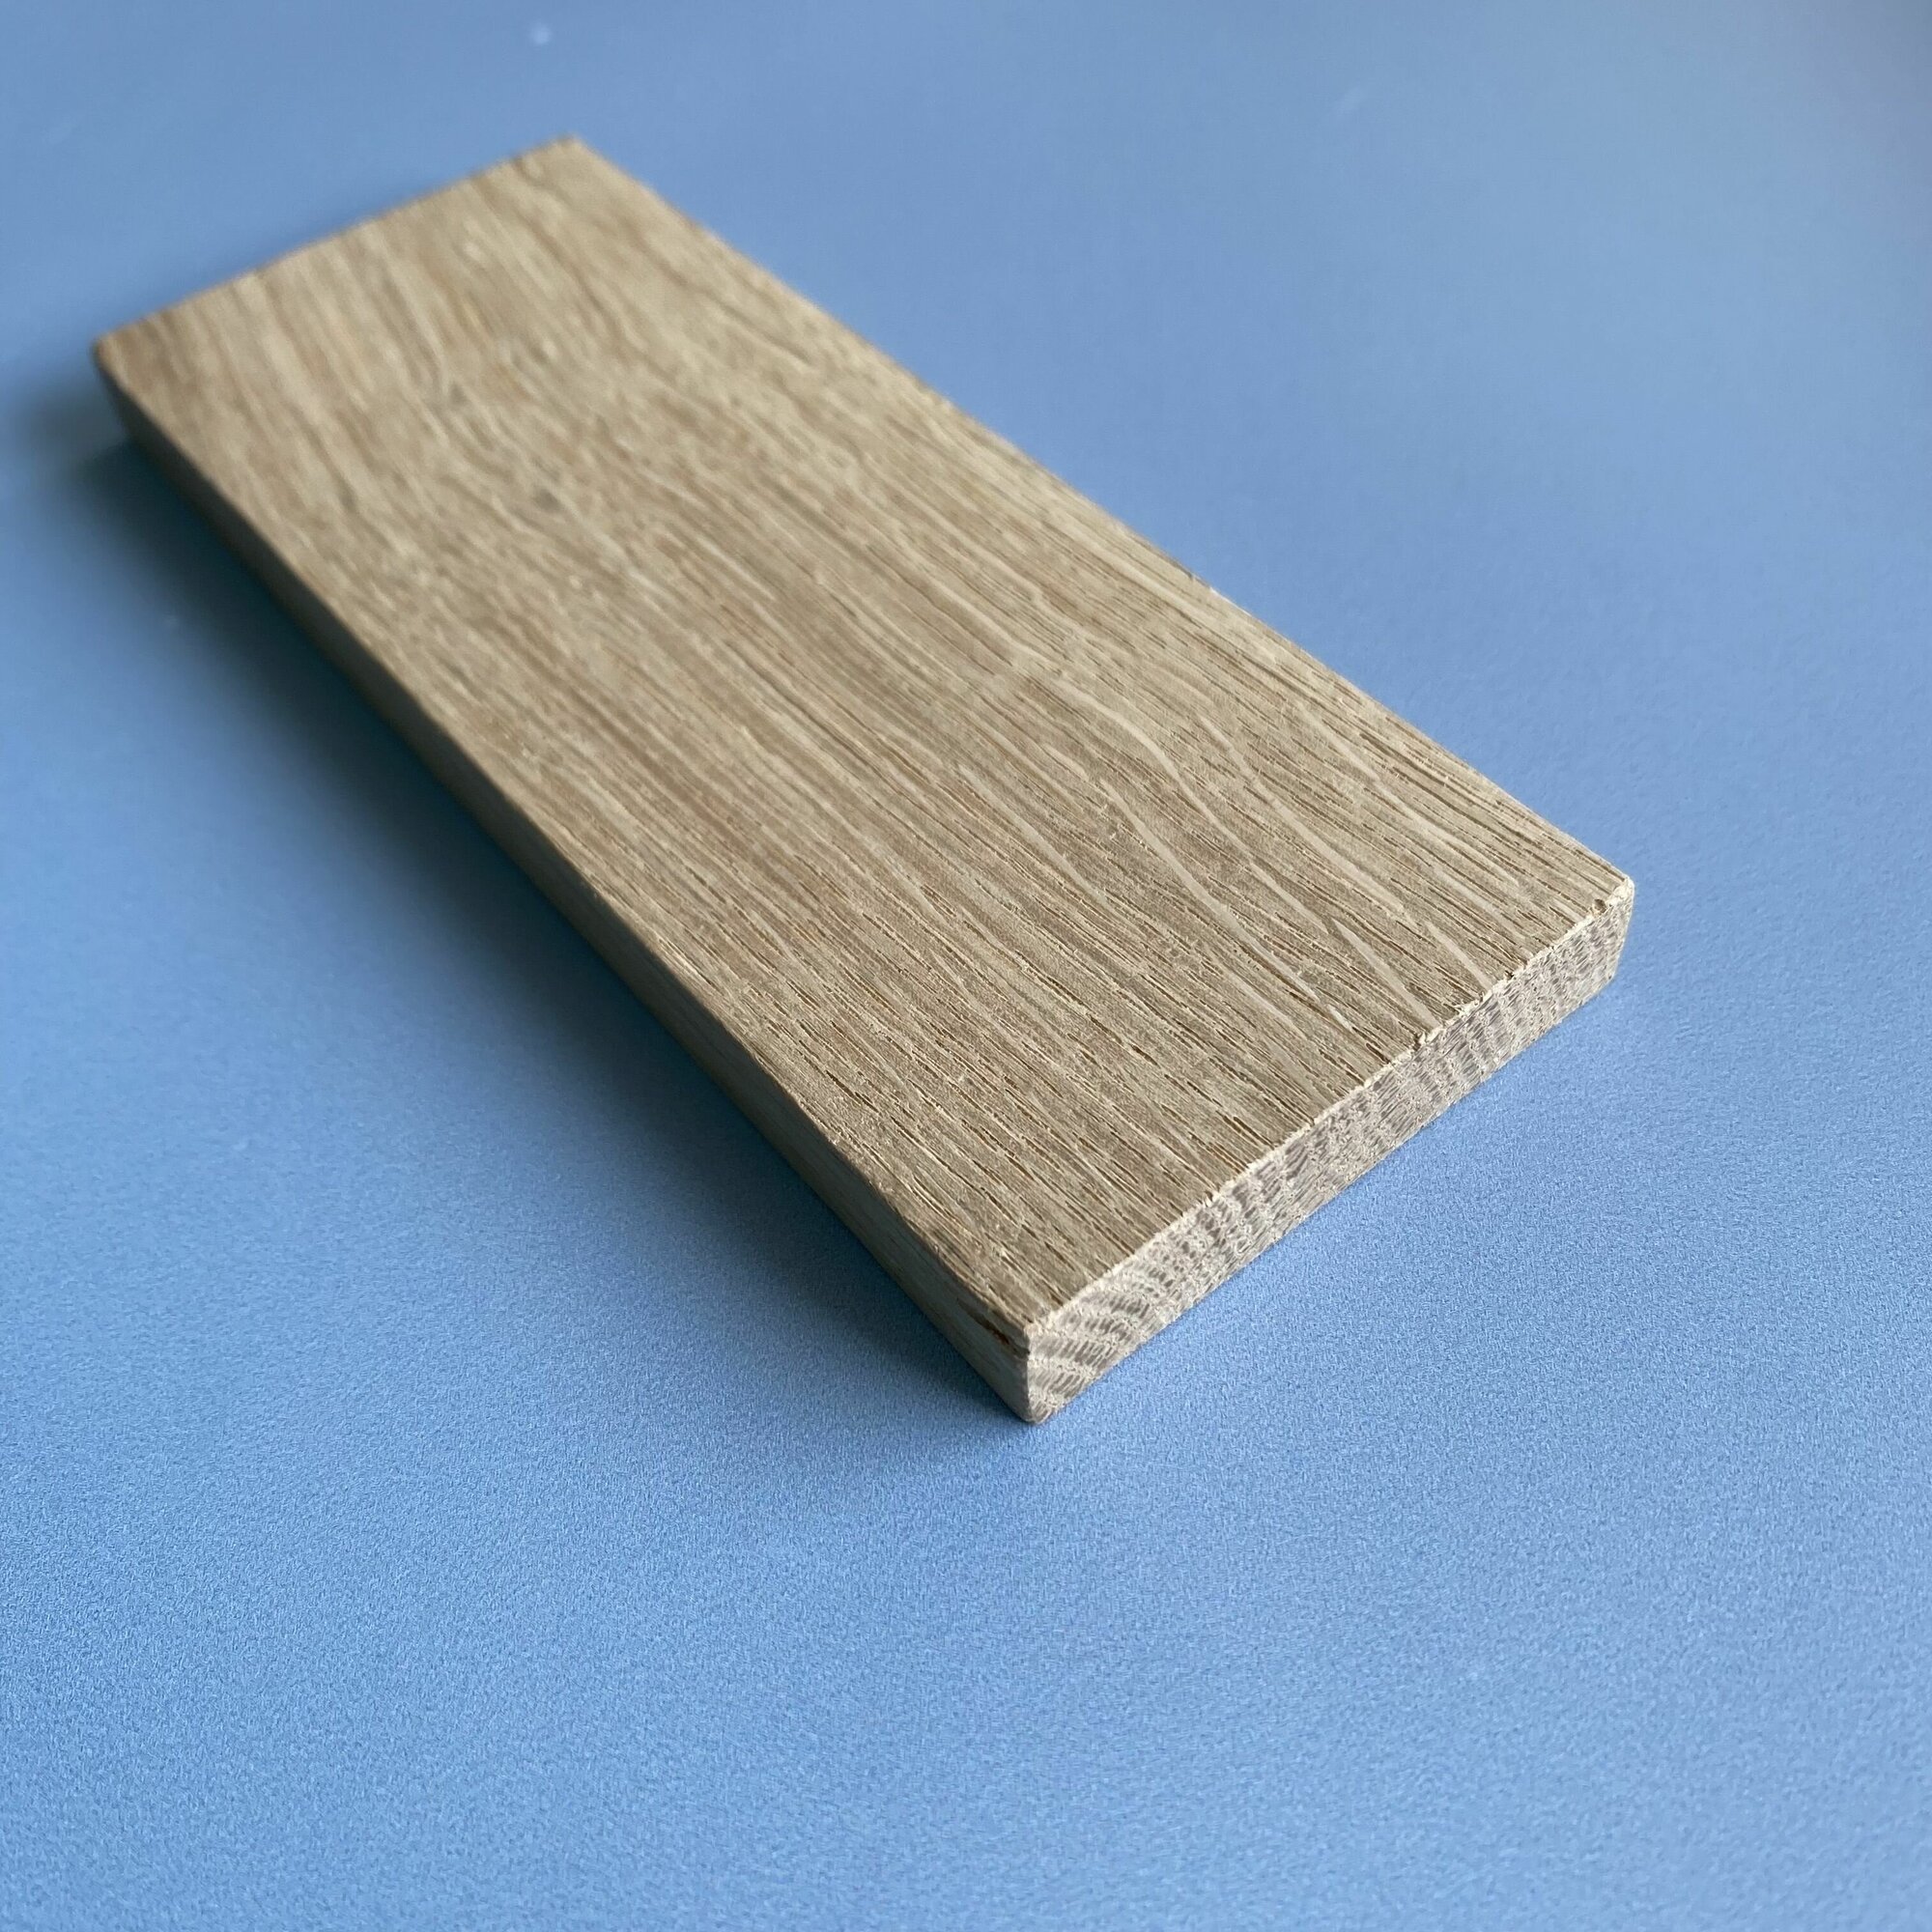 Дуб брусок деревянный для рукоделия хобби поделок. Брусок строганый 13х5х1 см для рукояти ножа.